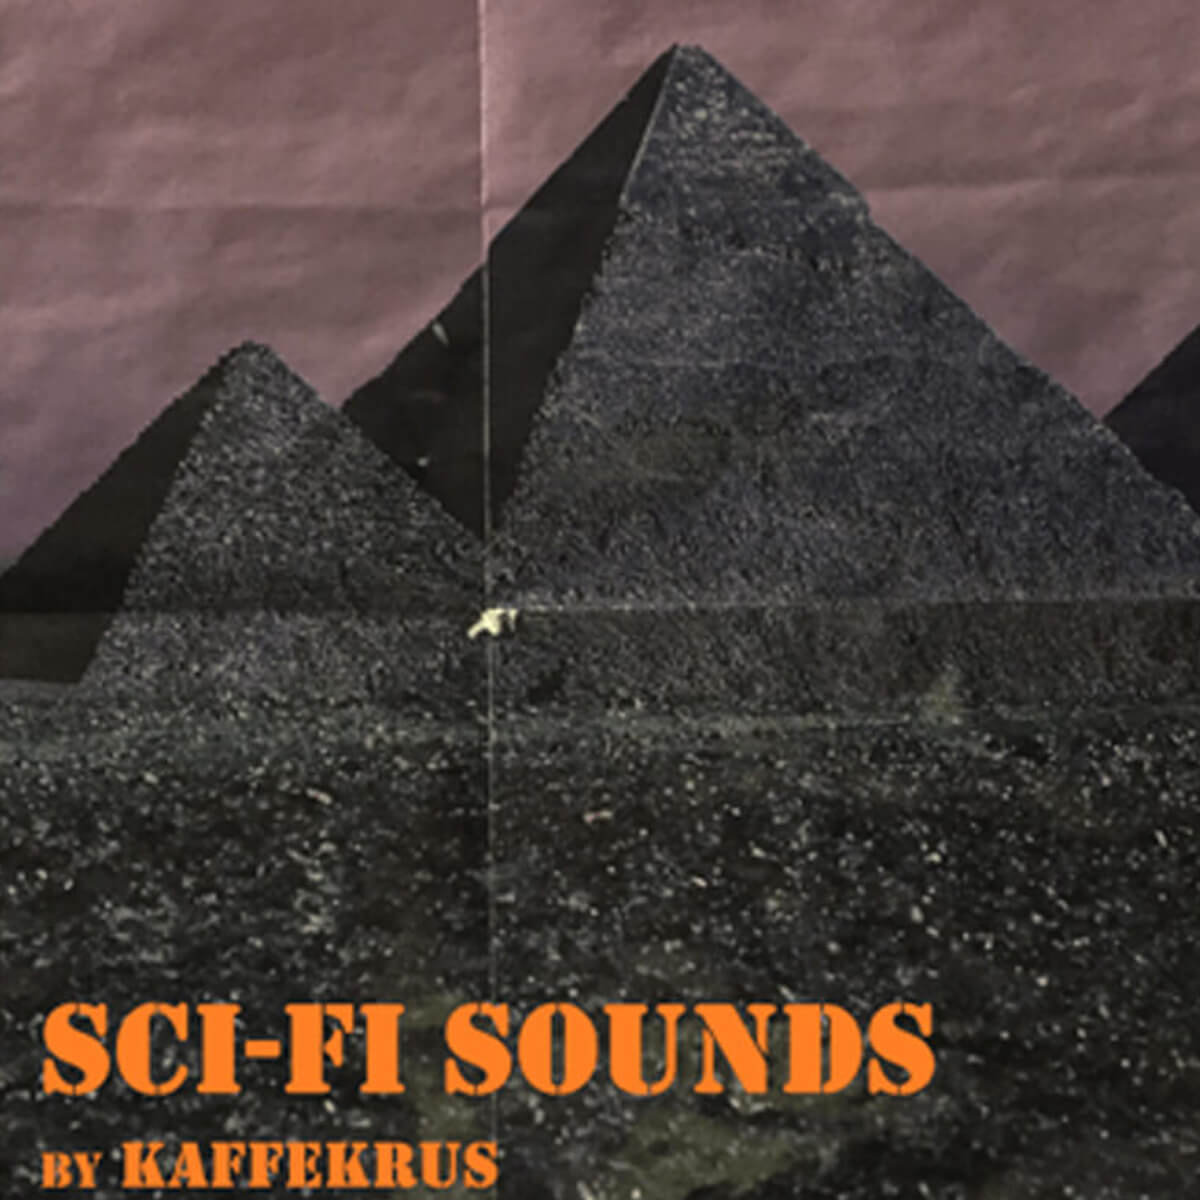 kaffekrus's Sci-Fi Sounds